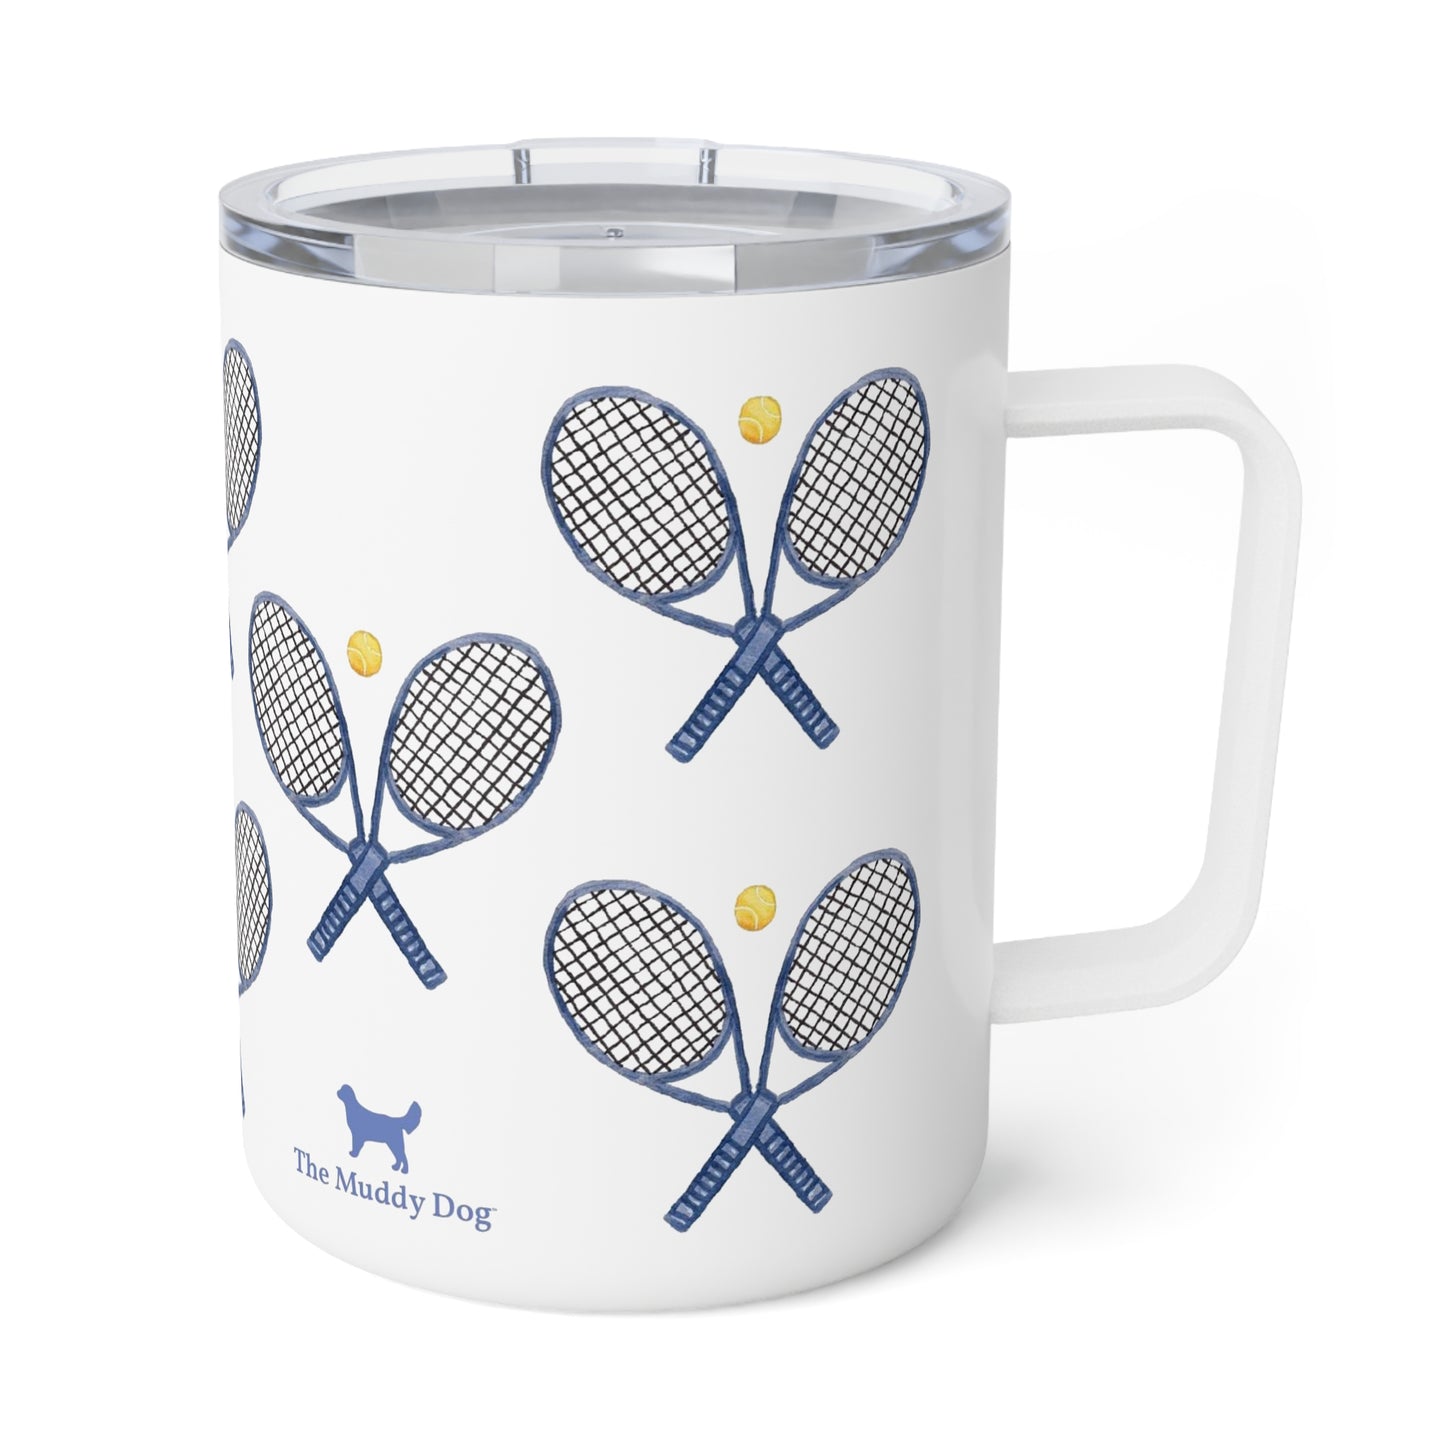 Tennis, Anyone? Insulated Mug